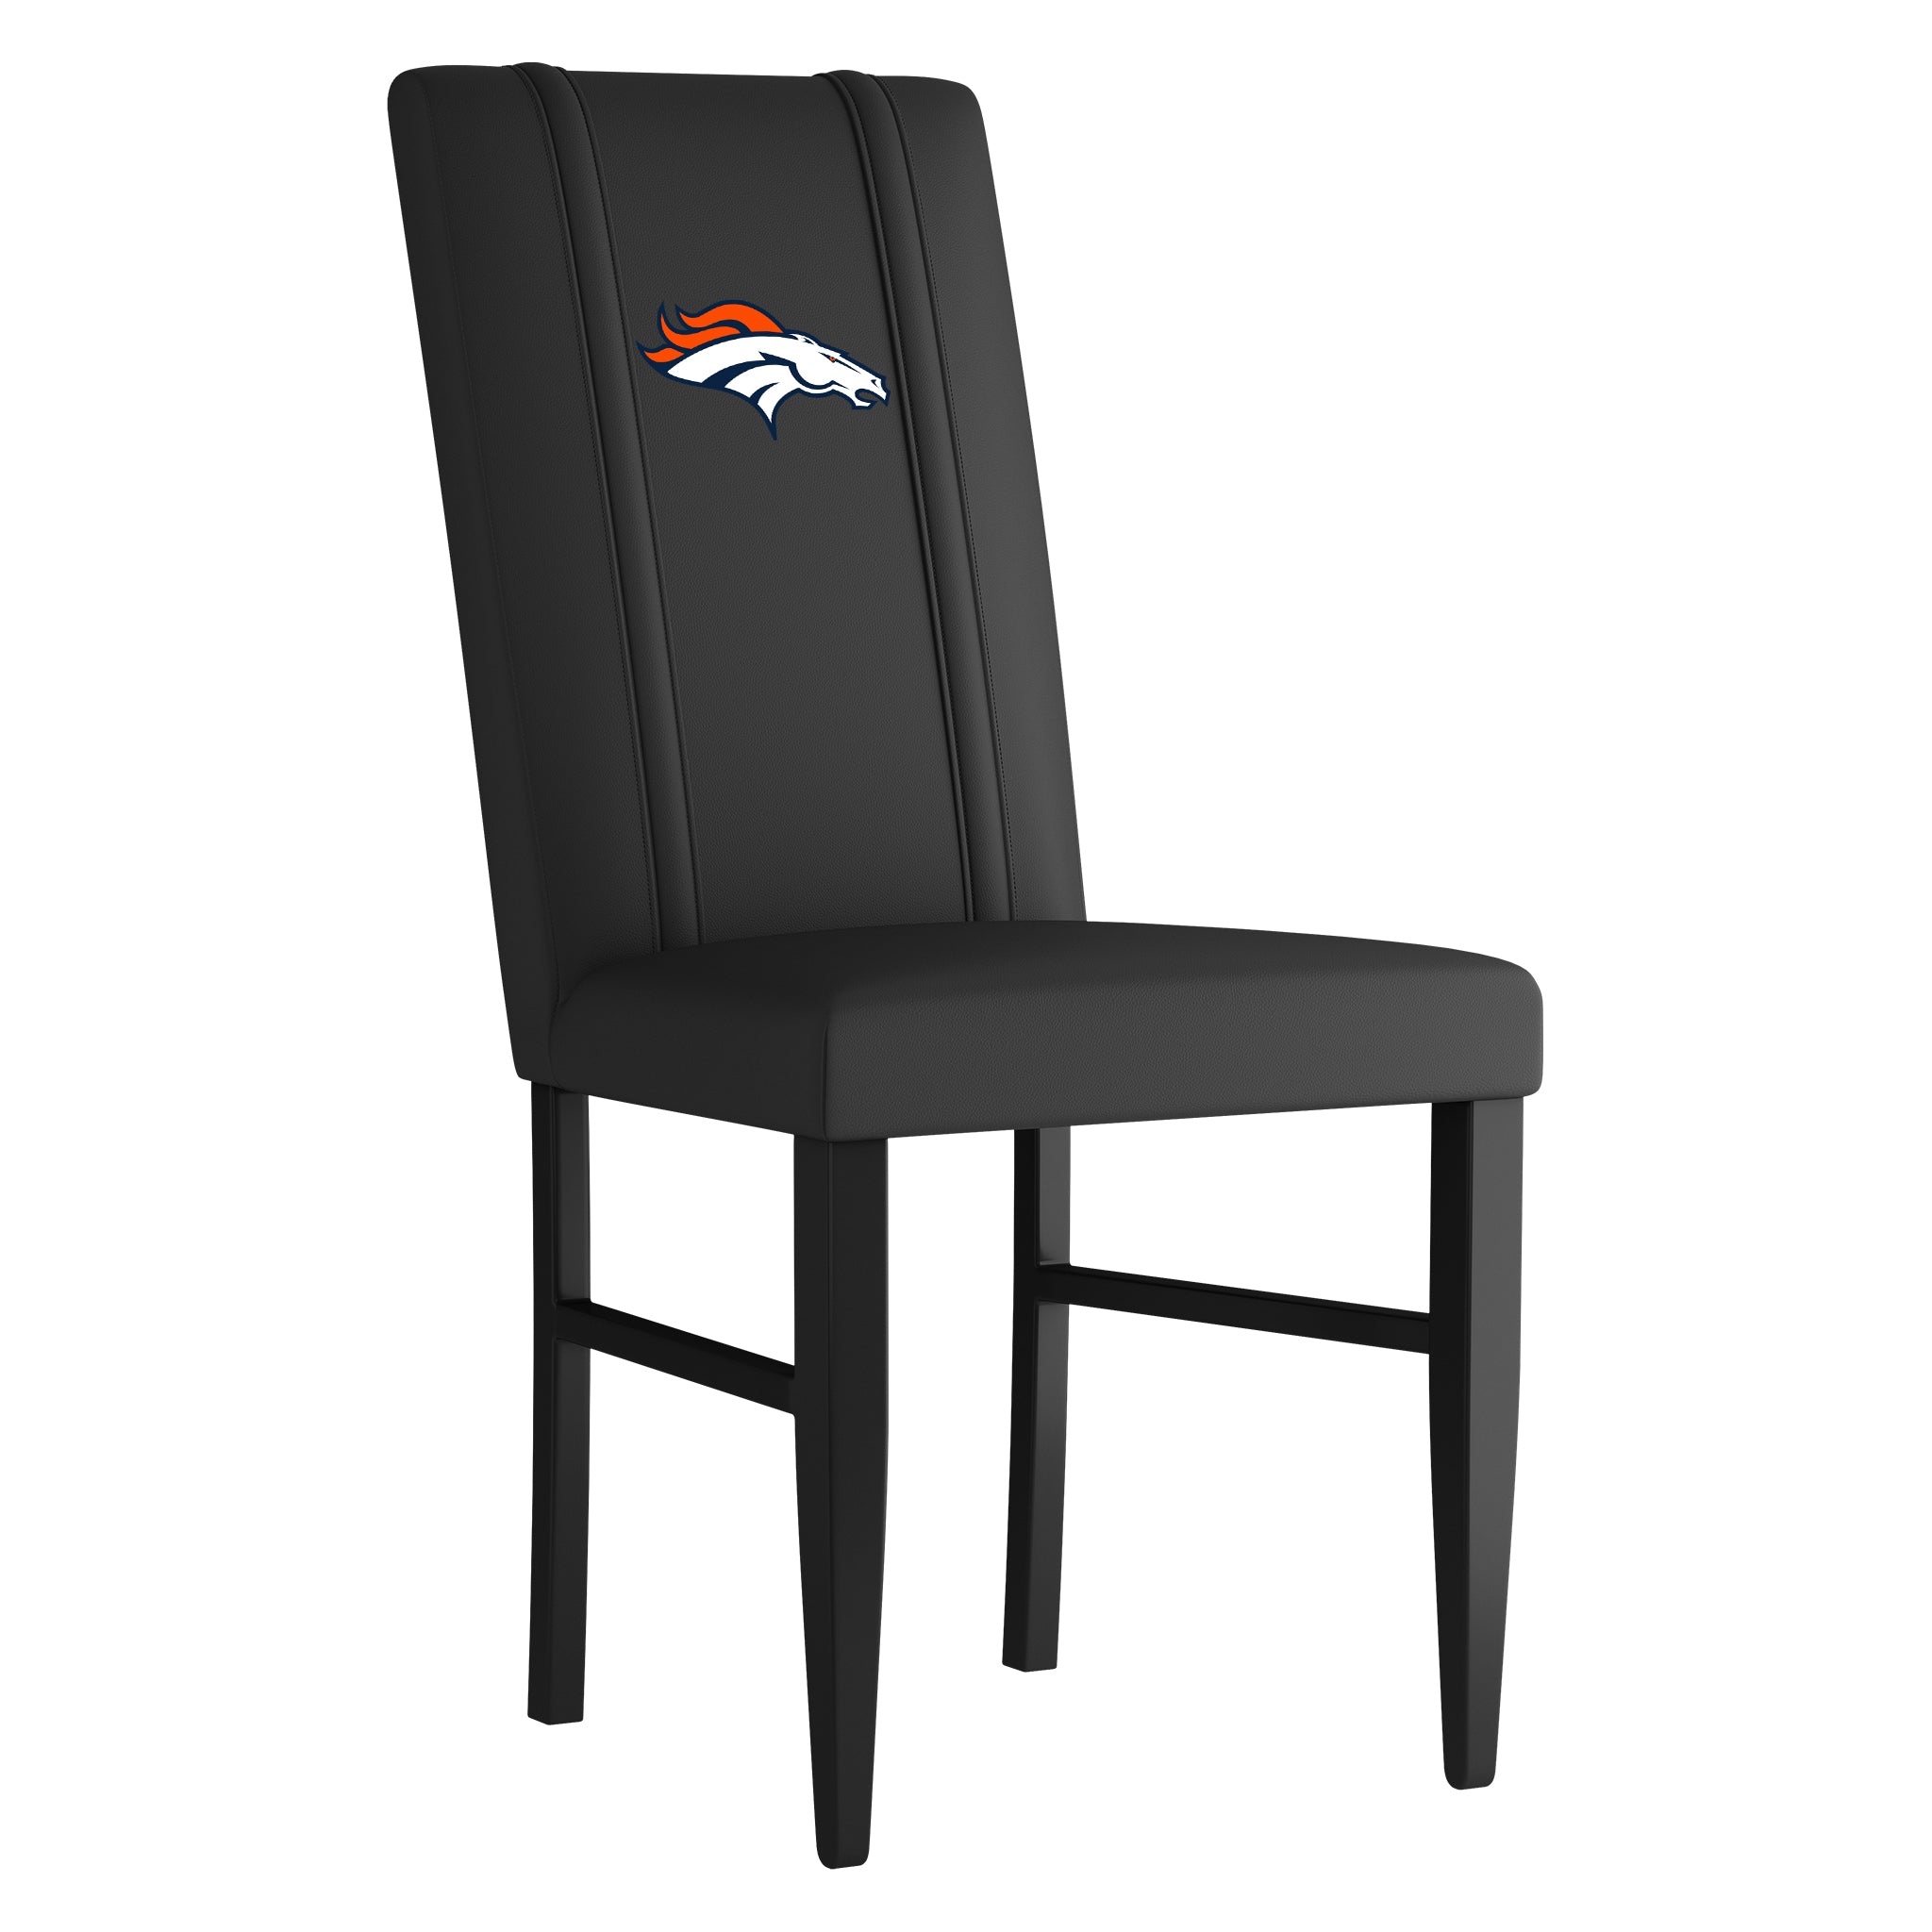 Denver Broncos Side Chair 2000